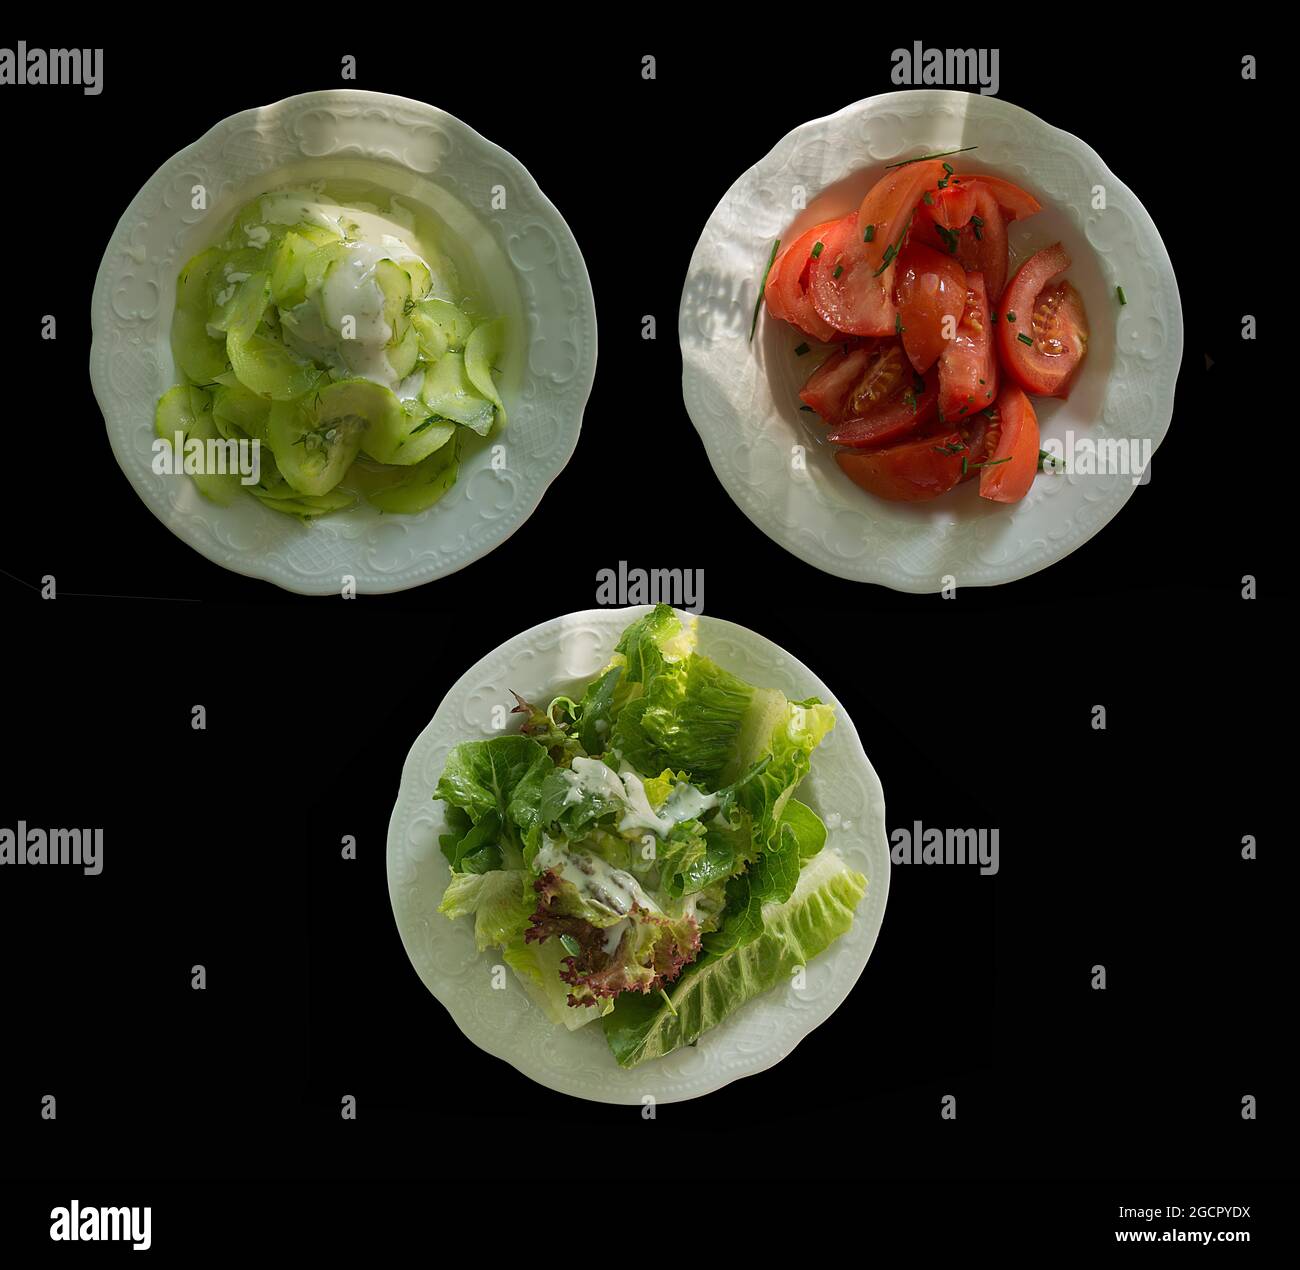 Three different salad plates, cucumber salad, tomato salad and leaf salad on a black background, Bavaria, Germany Stock Photo